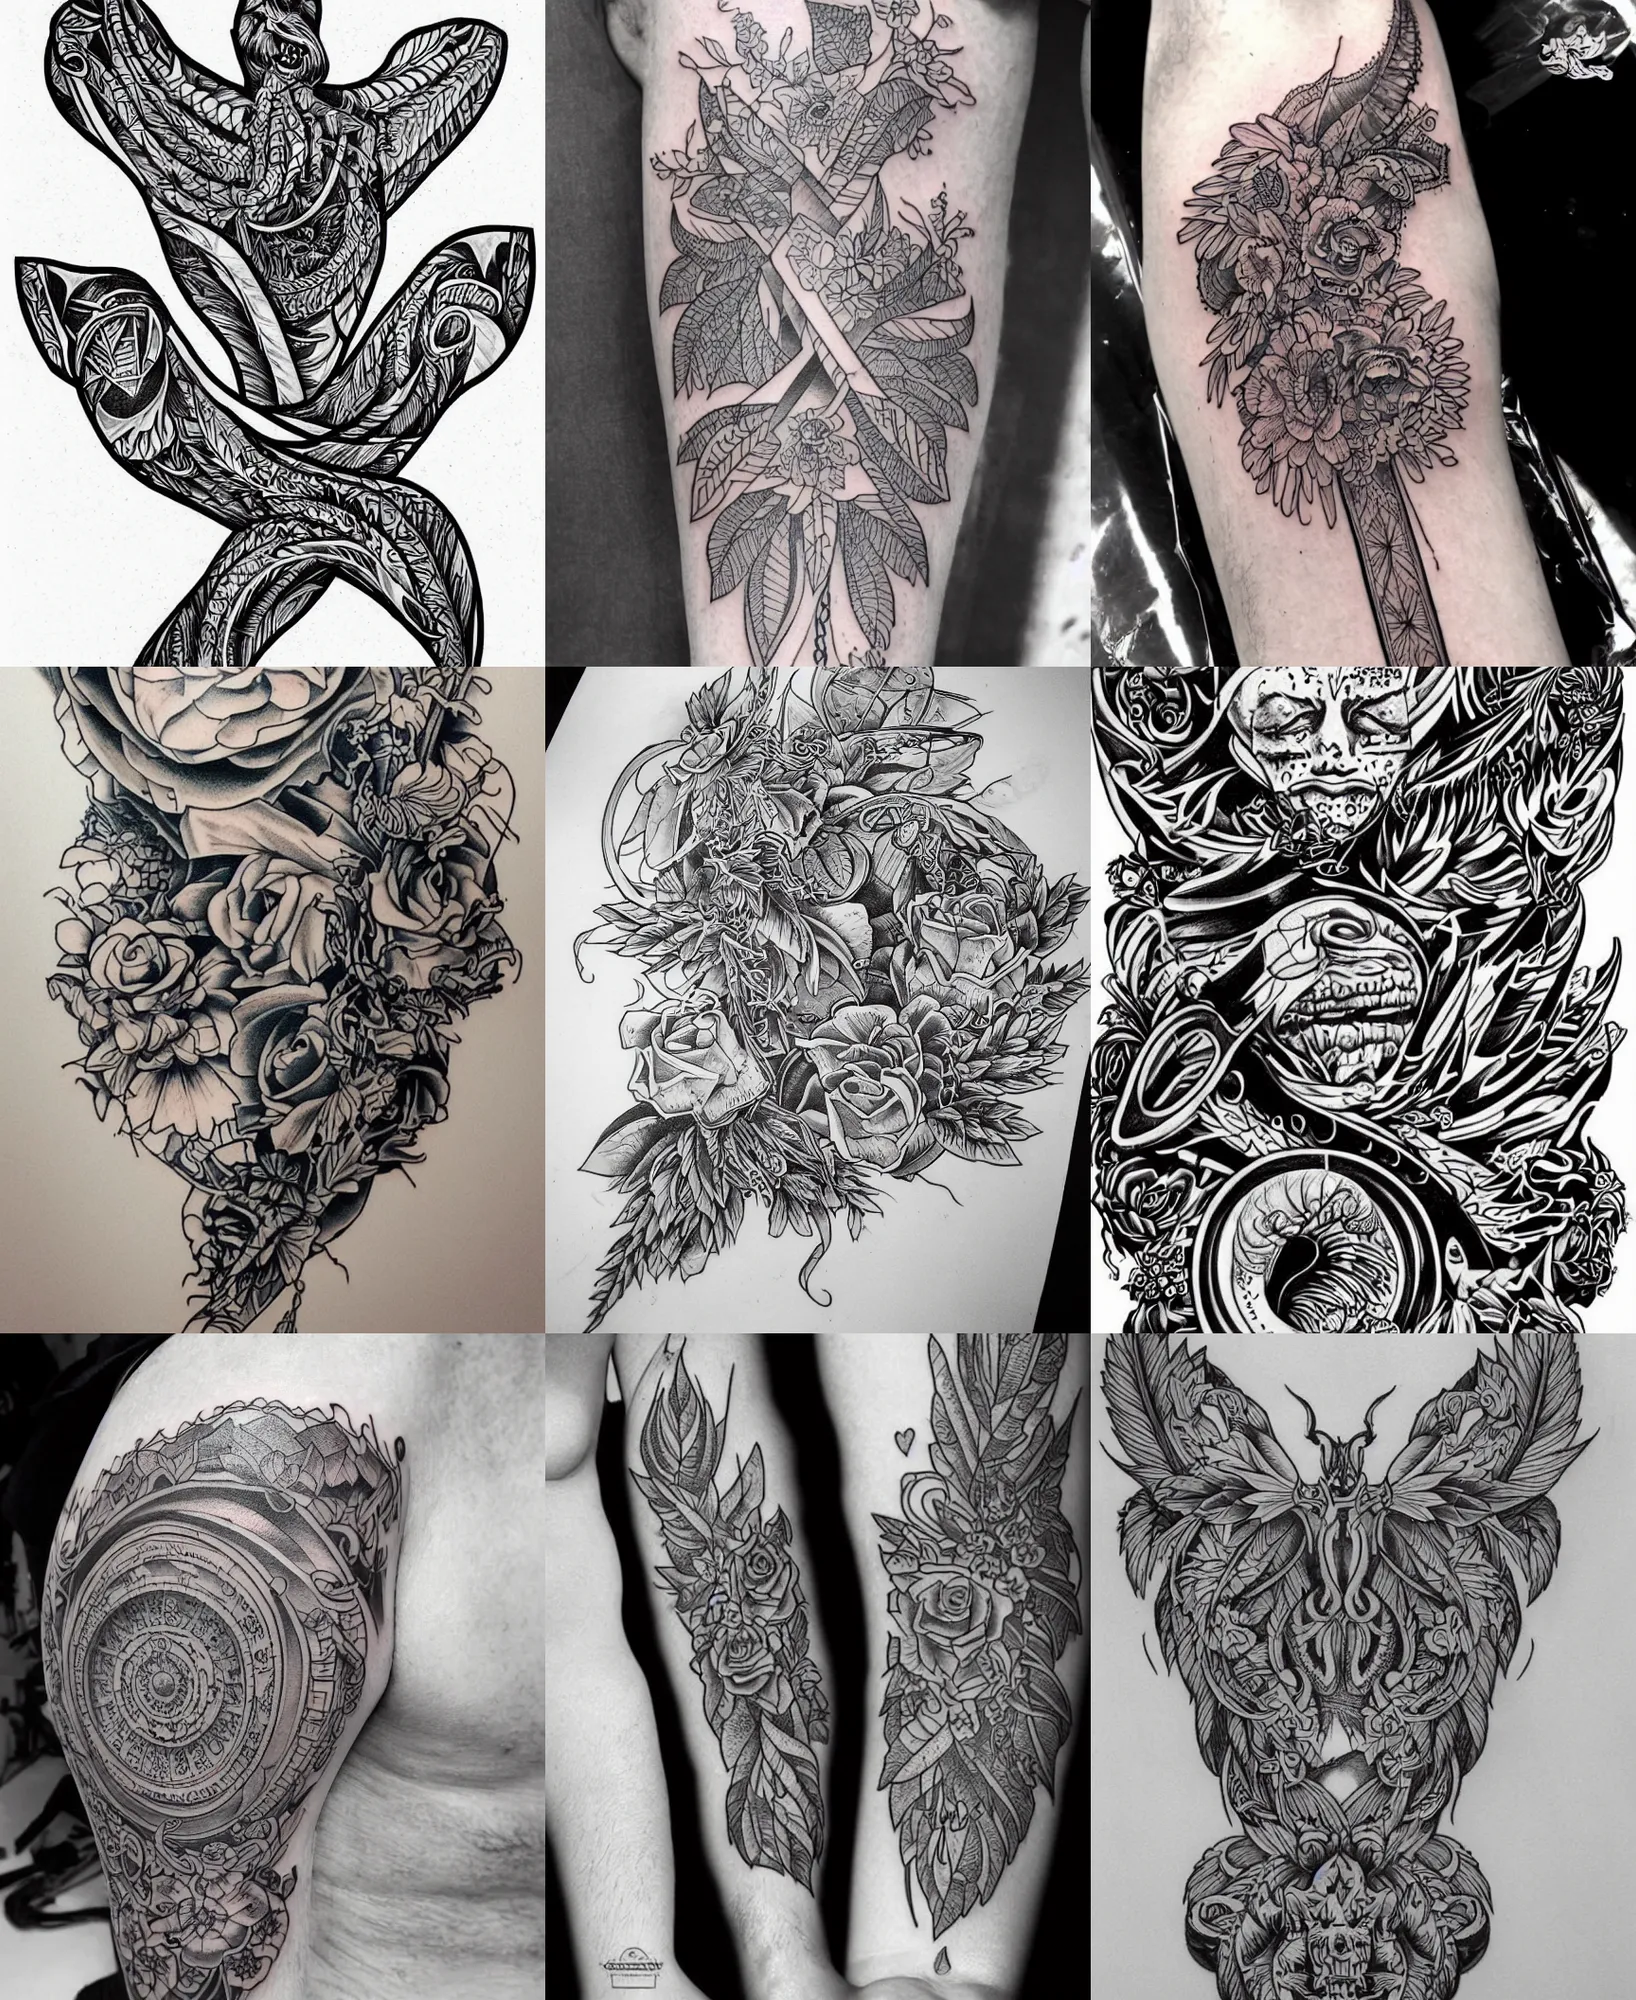 Amazing Temporary Tattoos men large full arm sleeve tattoo god wolf moon  dragon lion king tiger forest tattoo designs big body - AliExpress